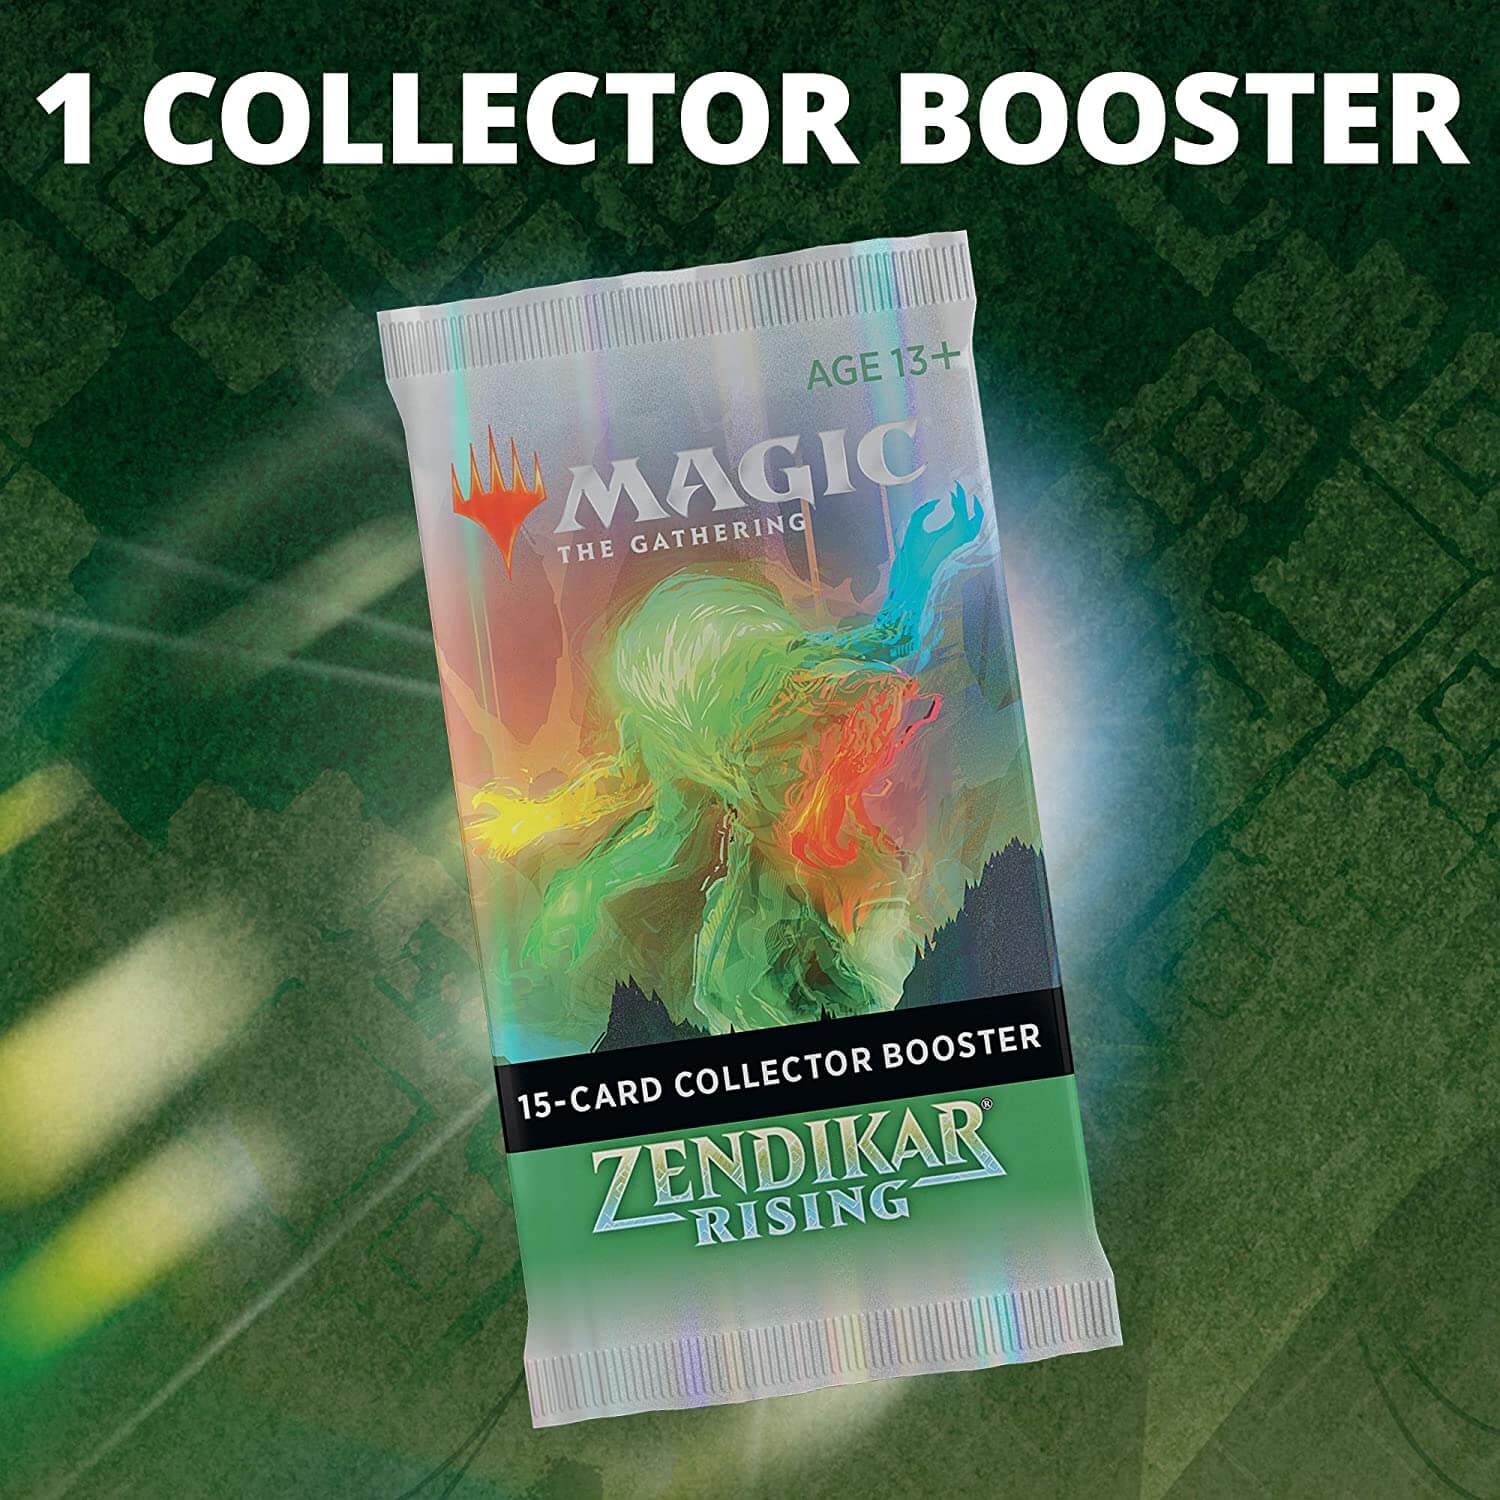 Magic The Gathering TCG Zendikar Rising Gift Edition